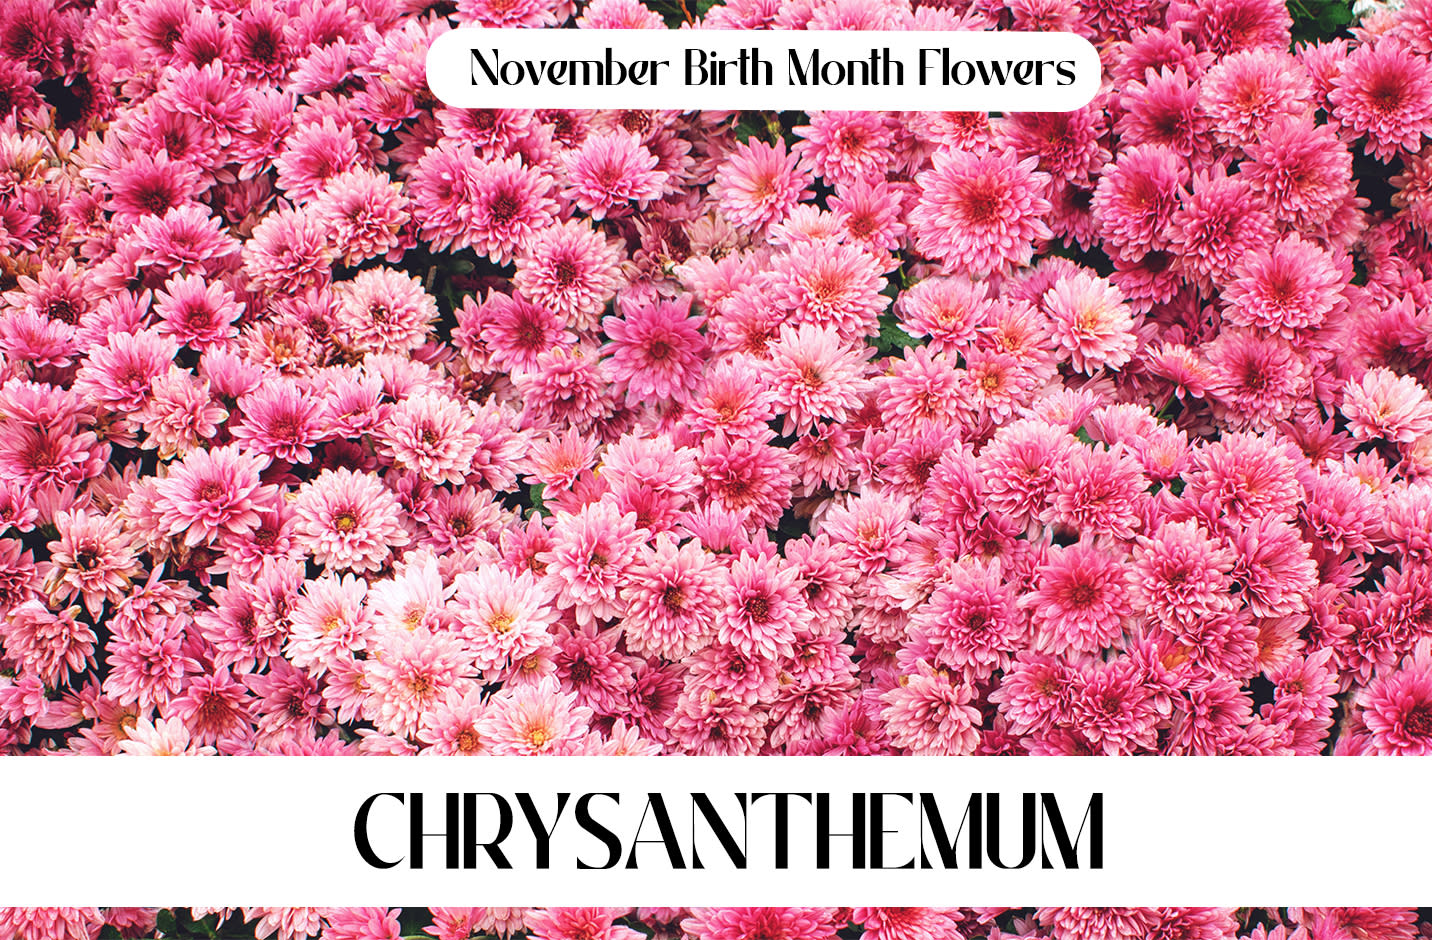 November Birth Month Flowers